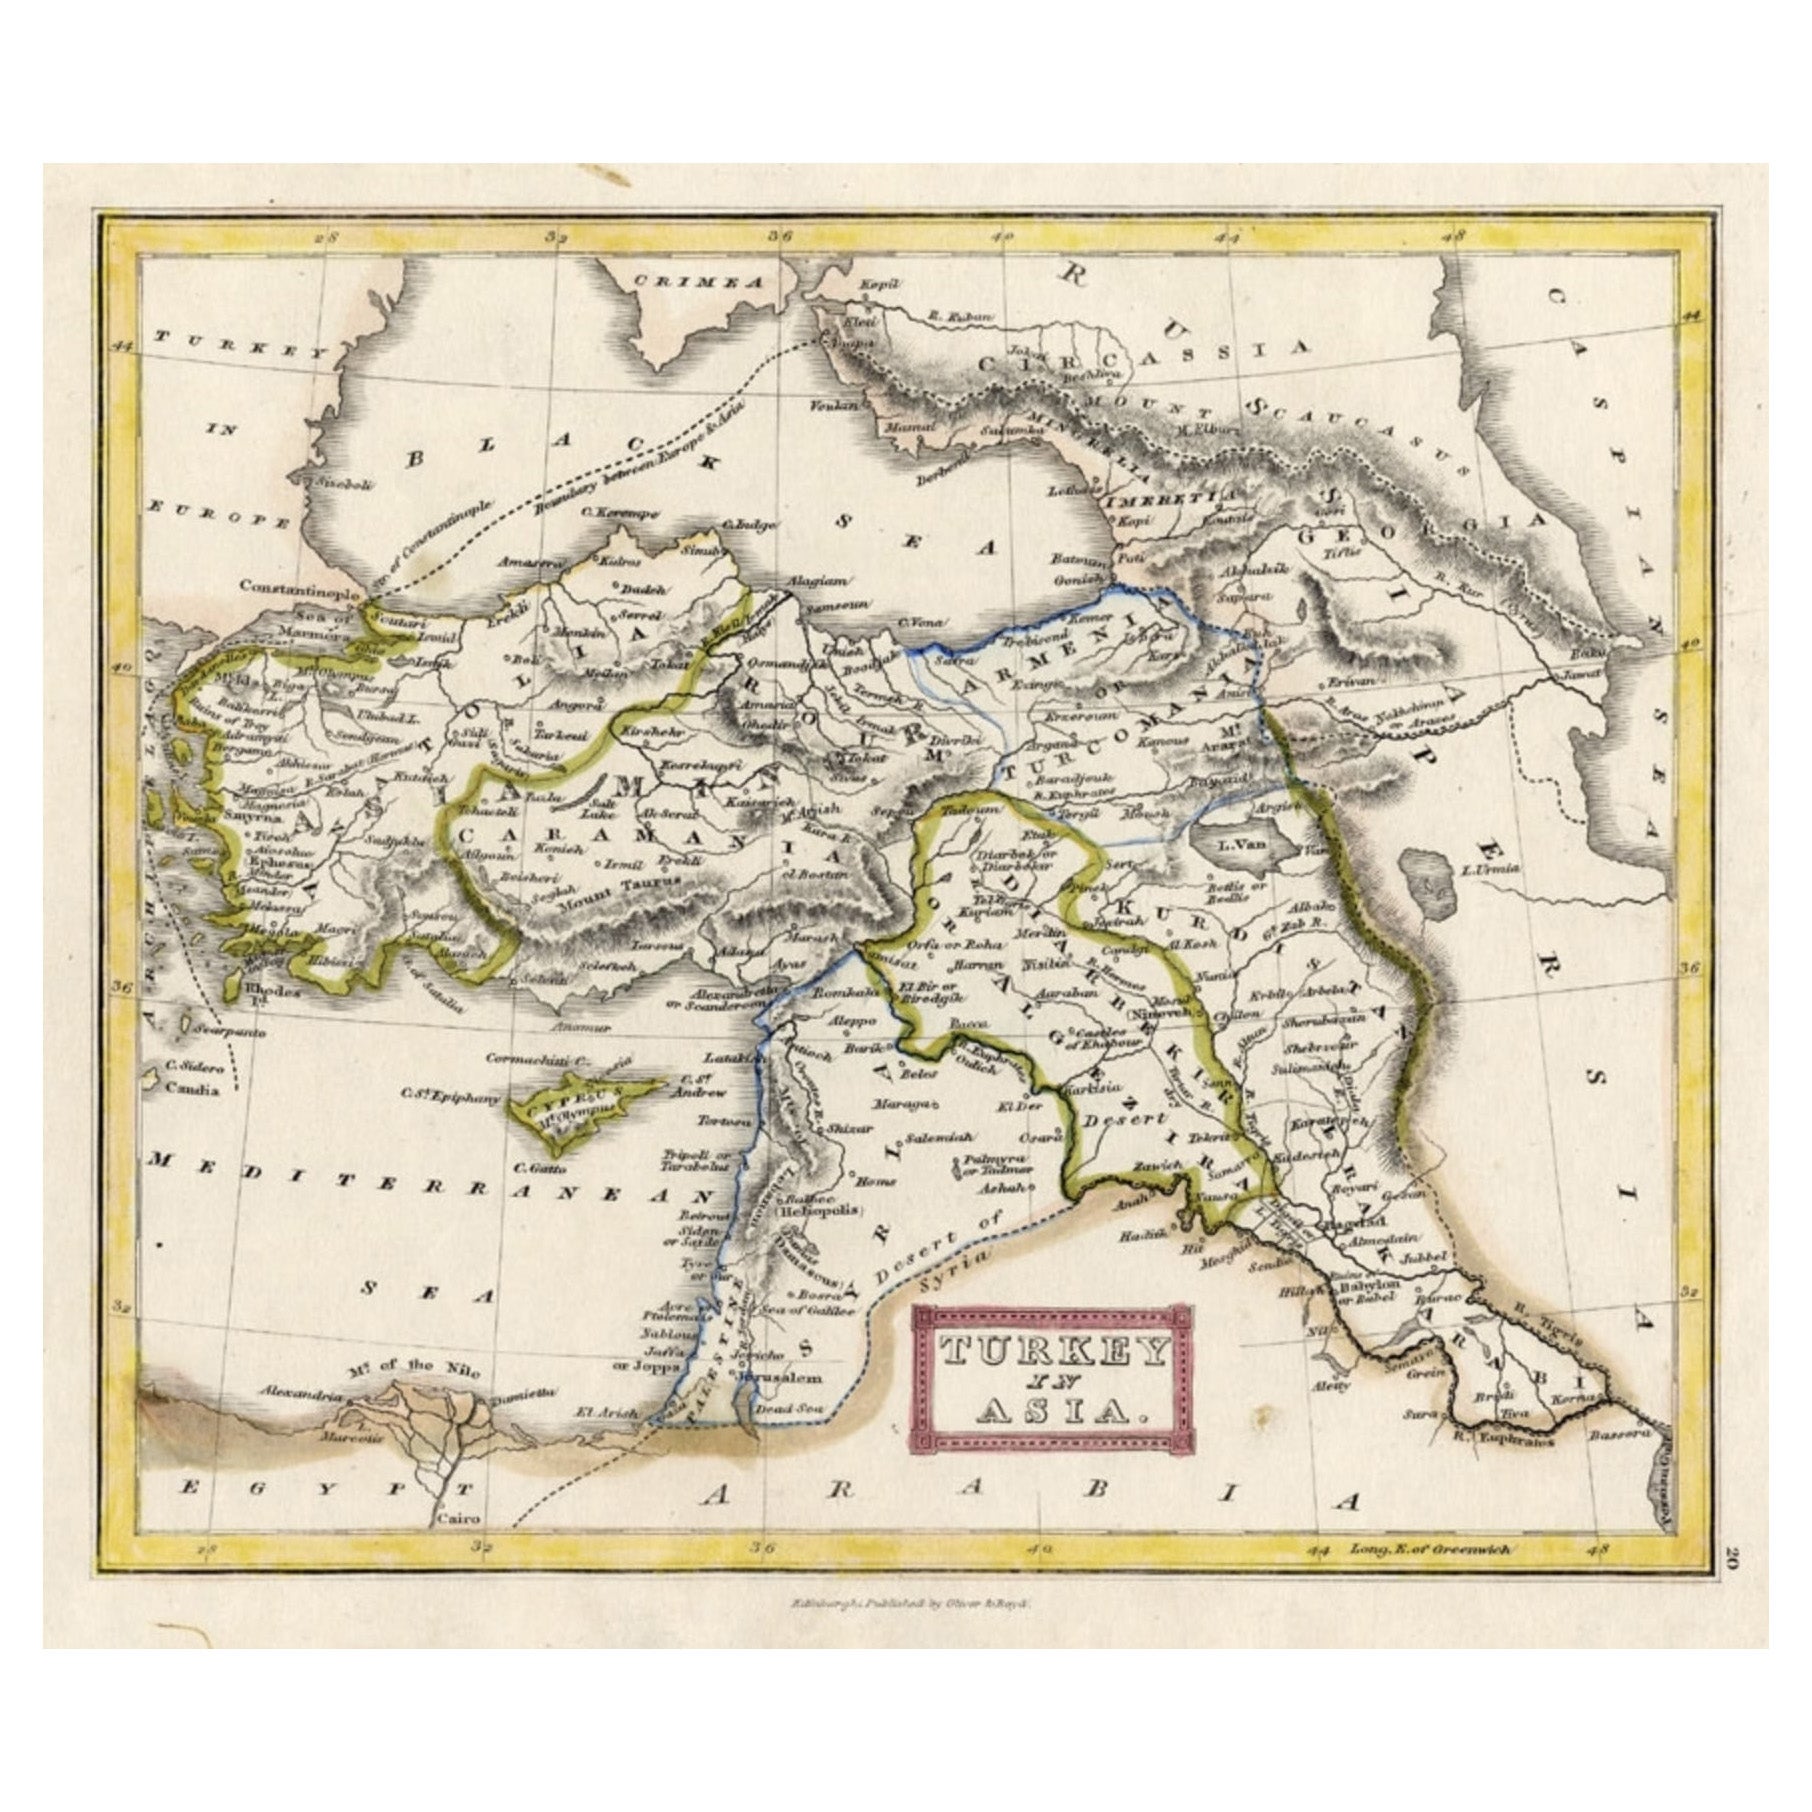 Antique Map of Turkey in Asia 'Asia Minor', 1841